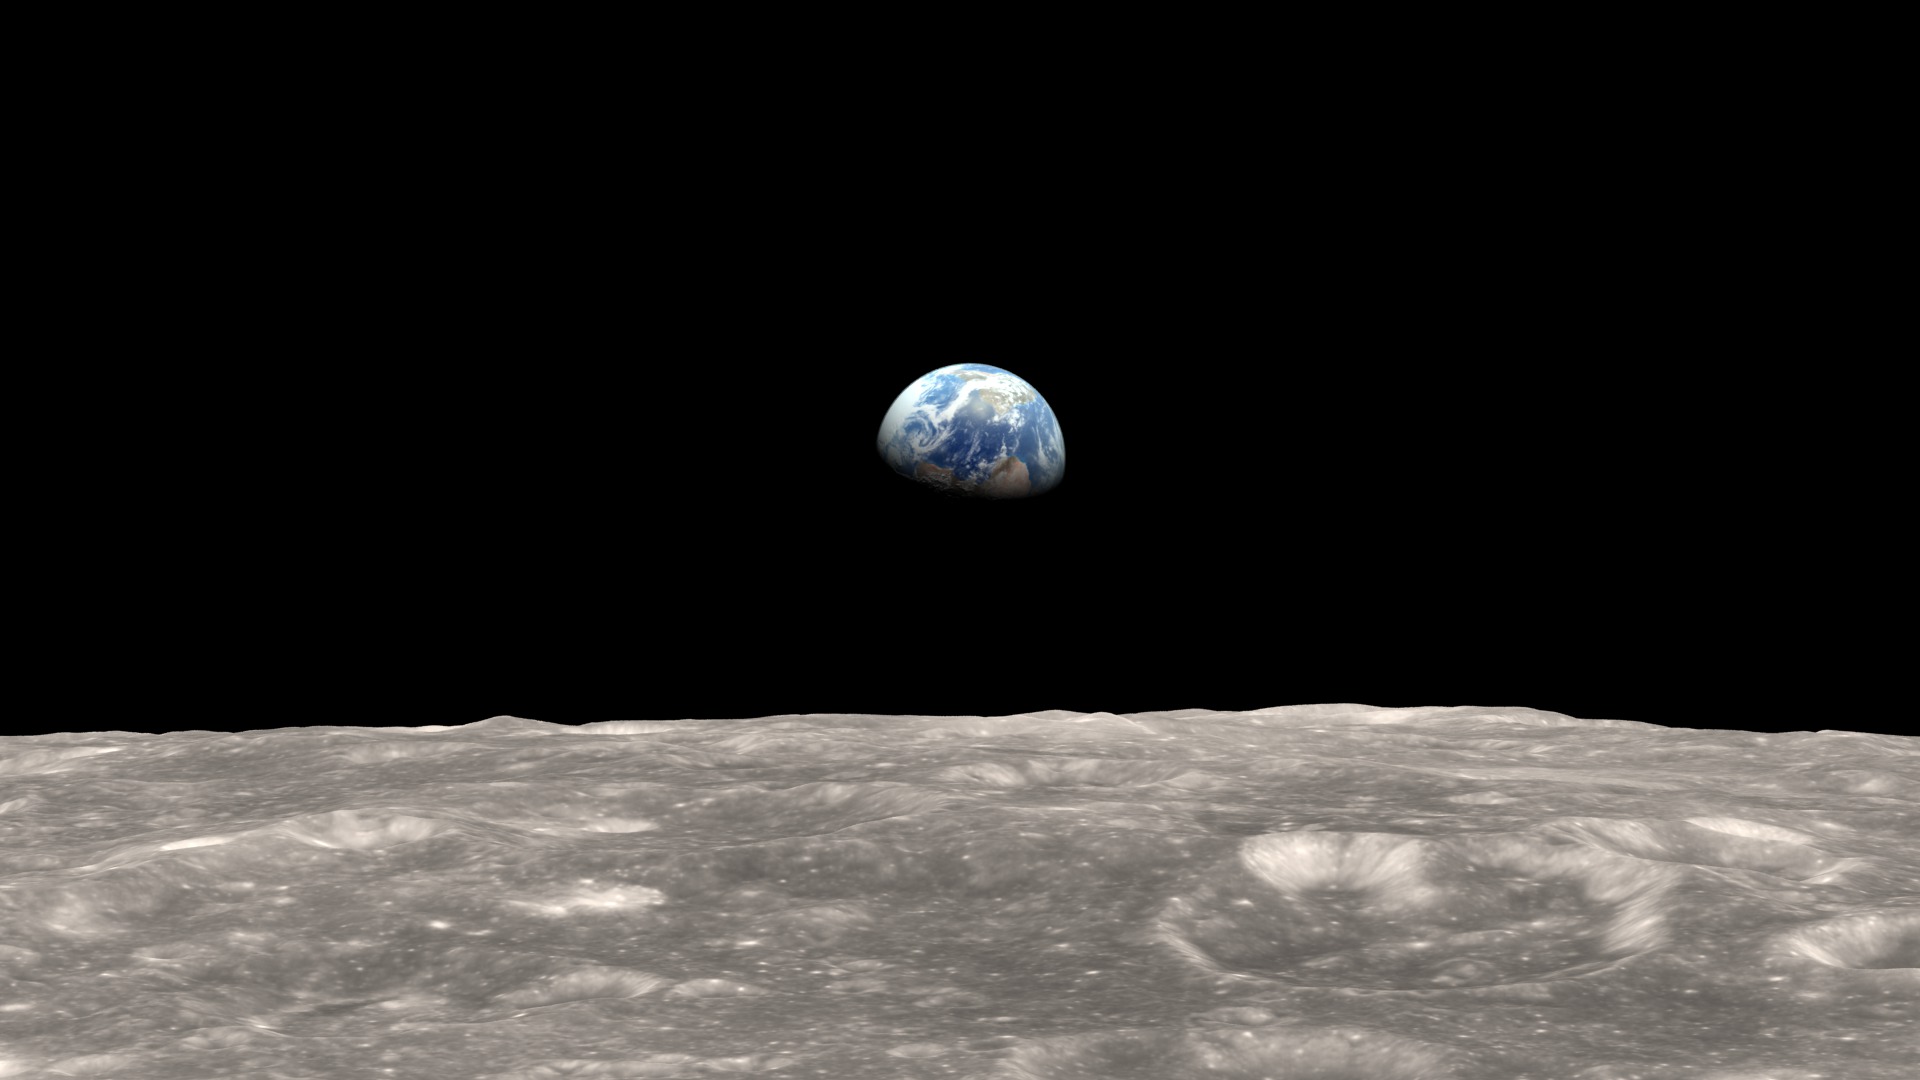 blue Earth against a black sky above the barren lunar surface